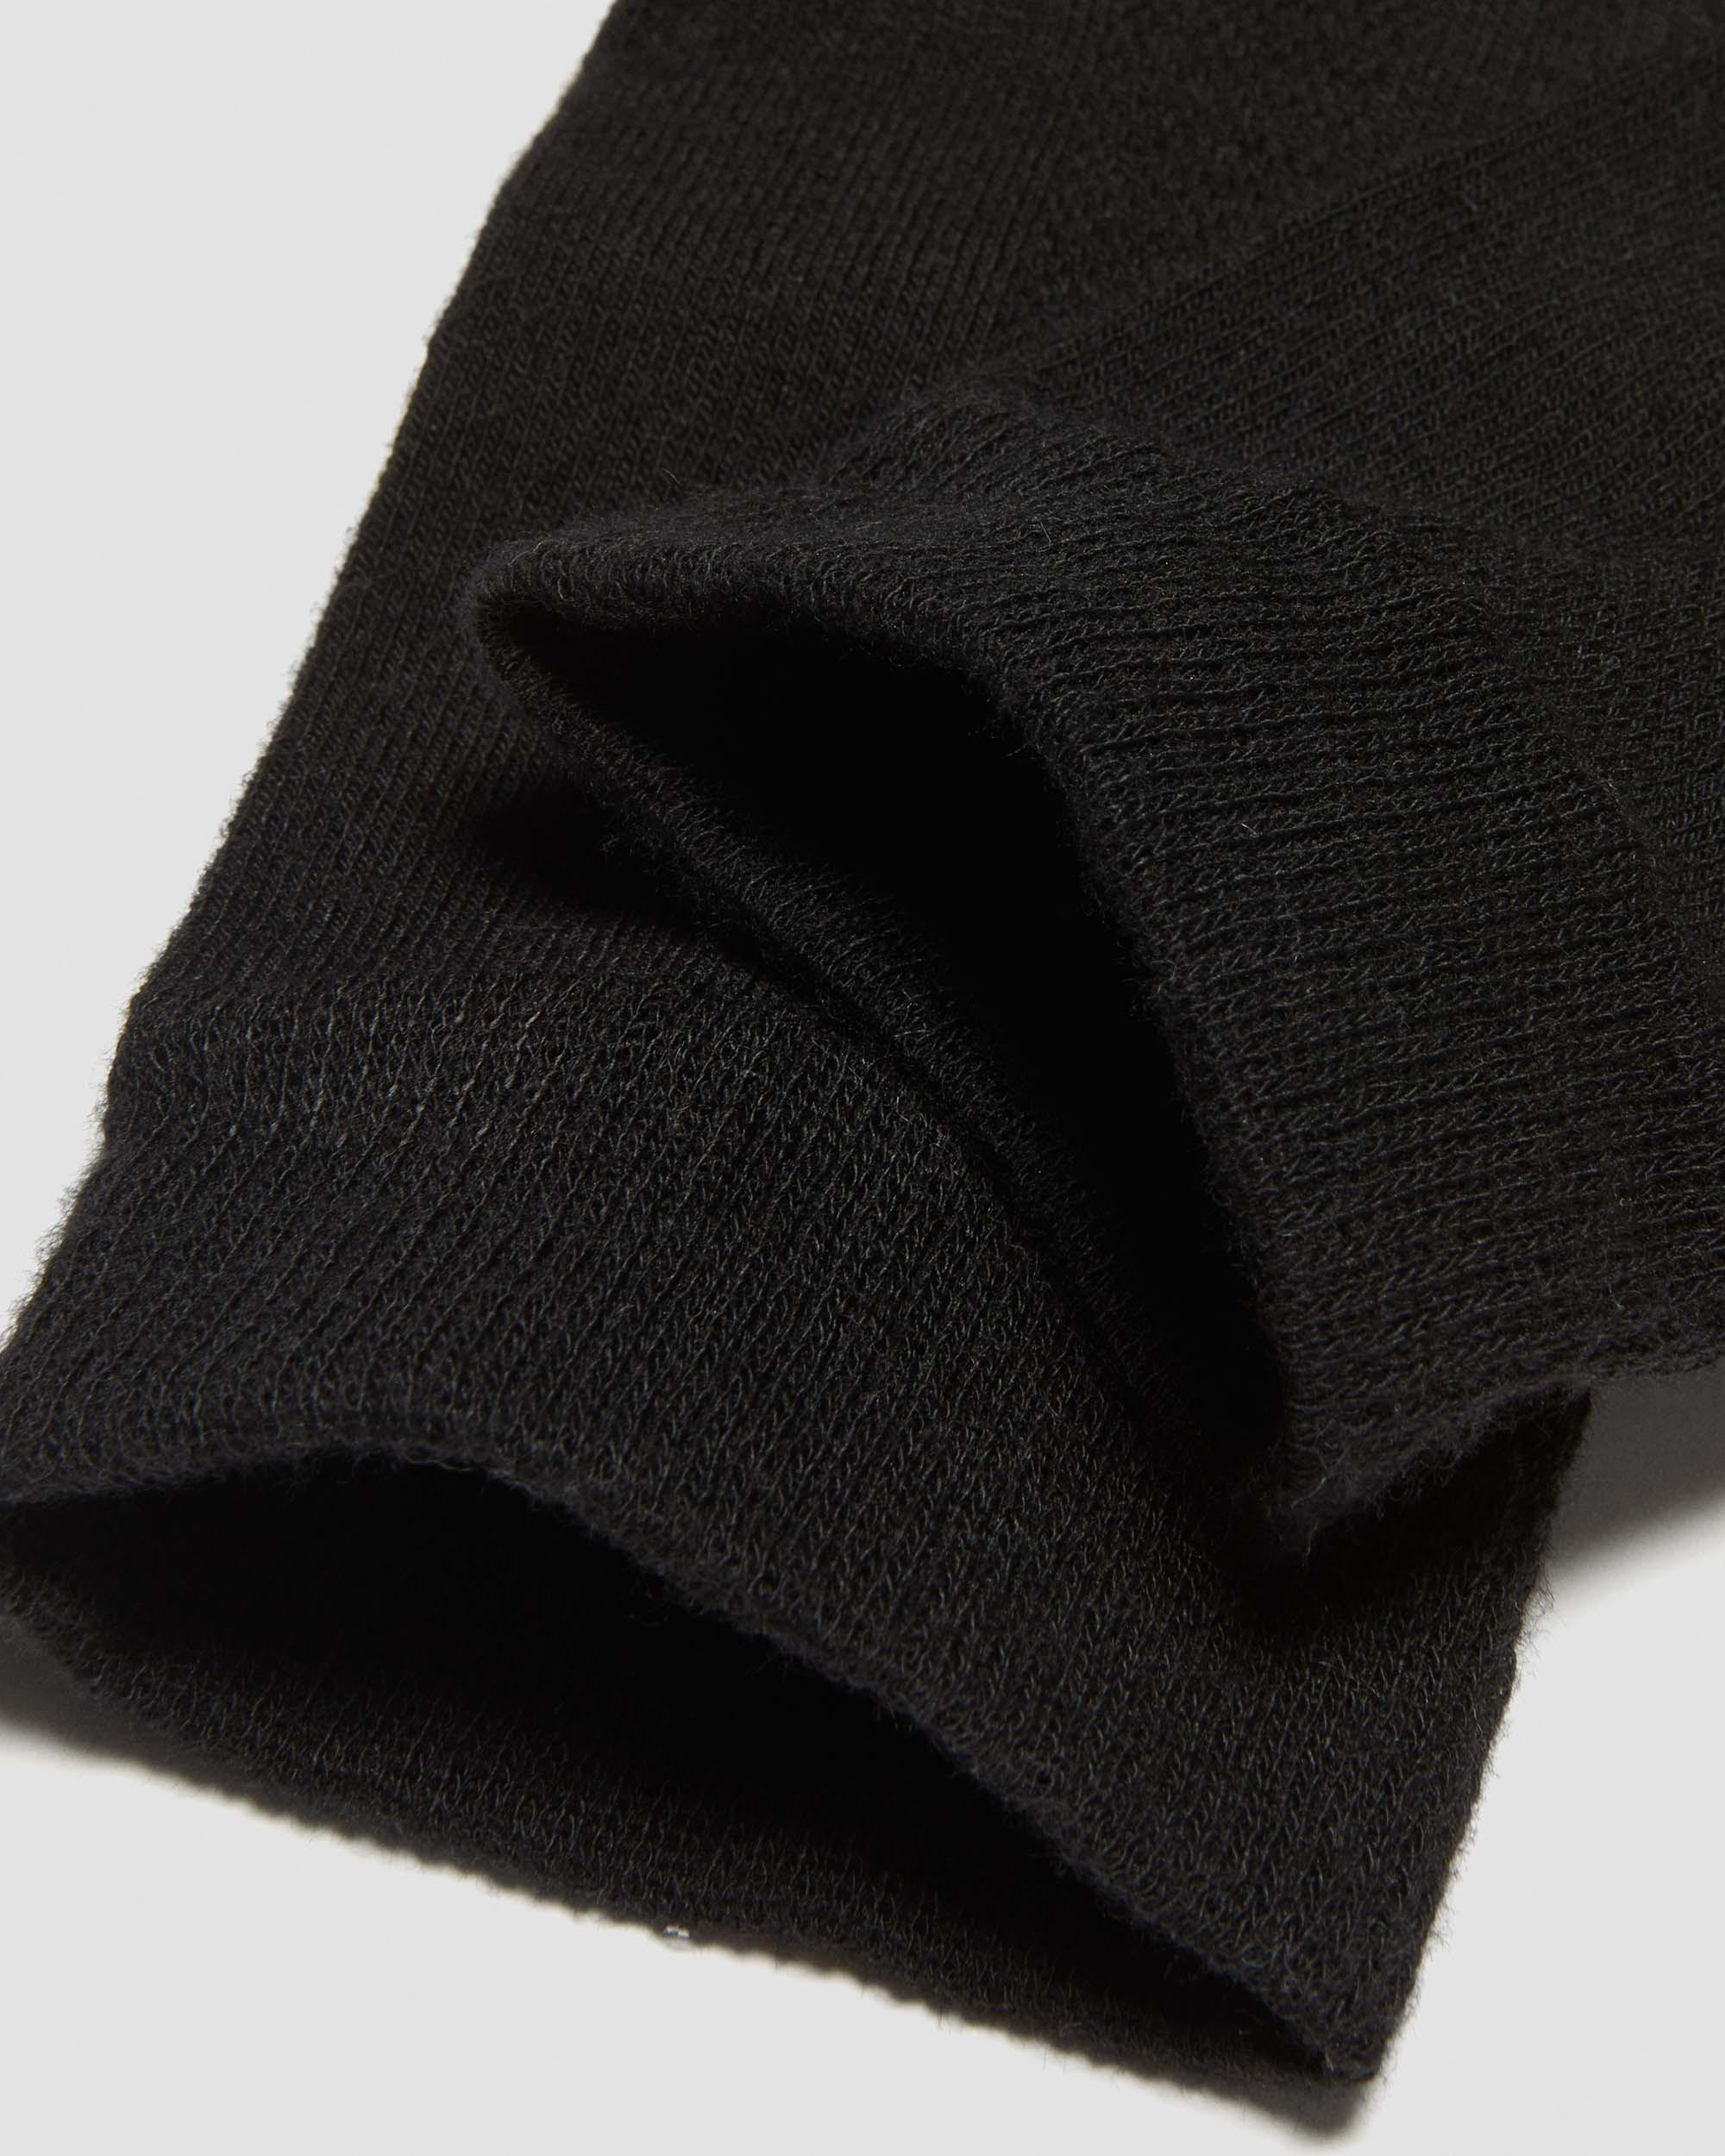 Shop Dr. Martens' Lightweight Tech Organic Cotton Socks In Black